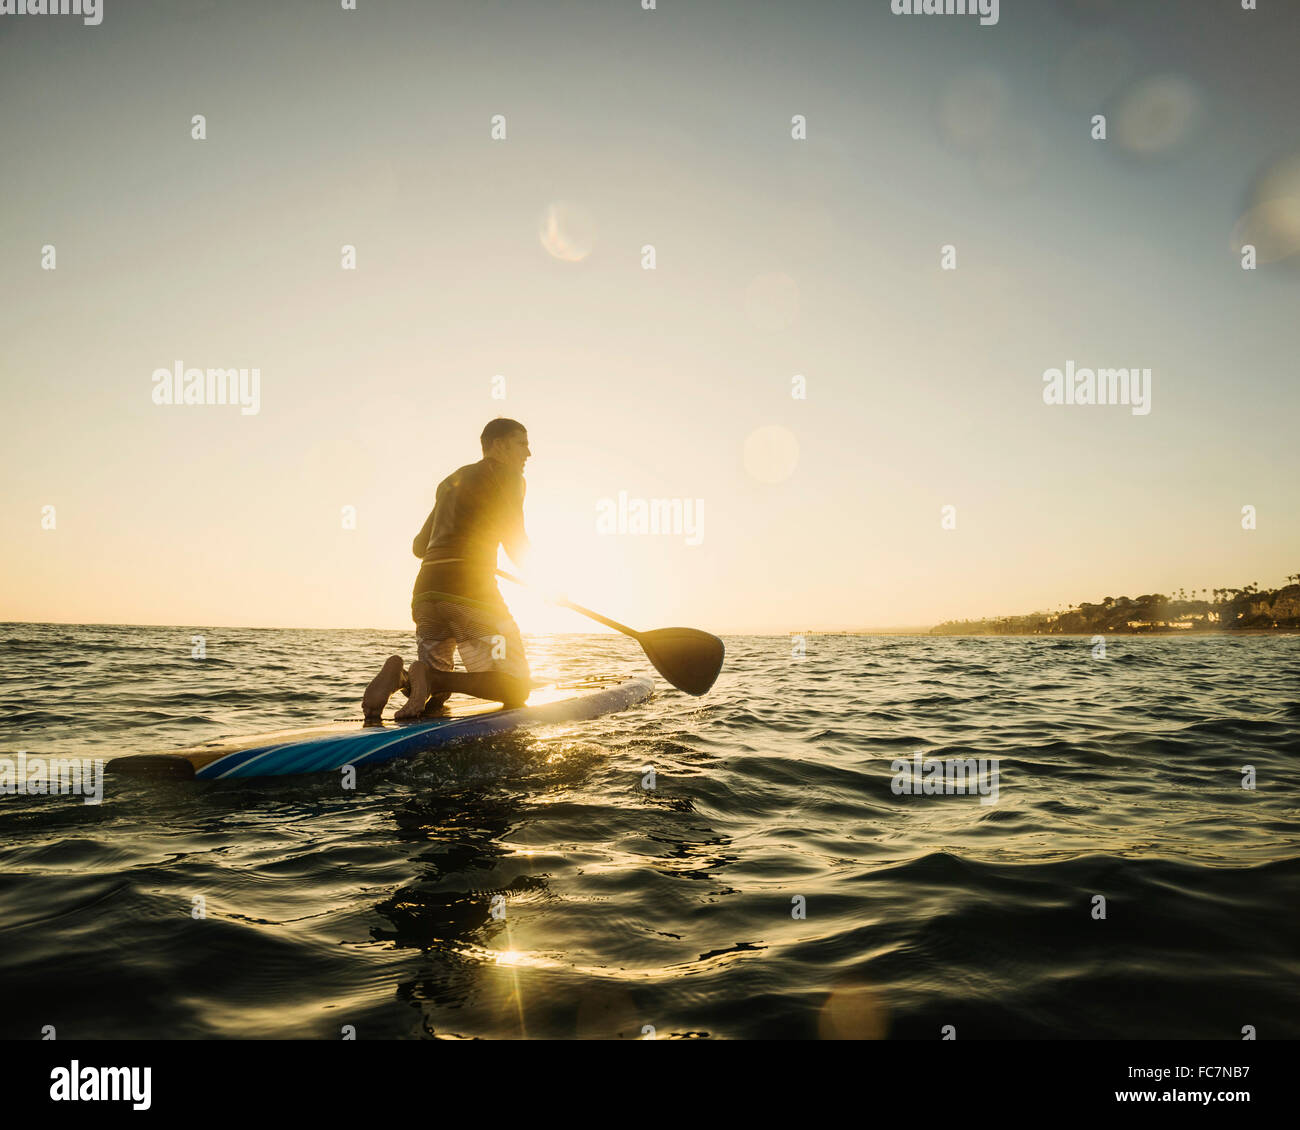 Caucasian man on paddle board in ocean Stock Photo